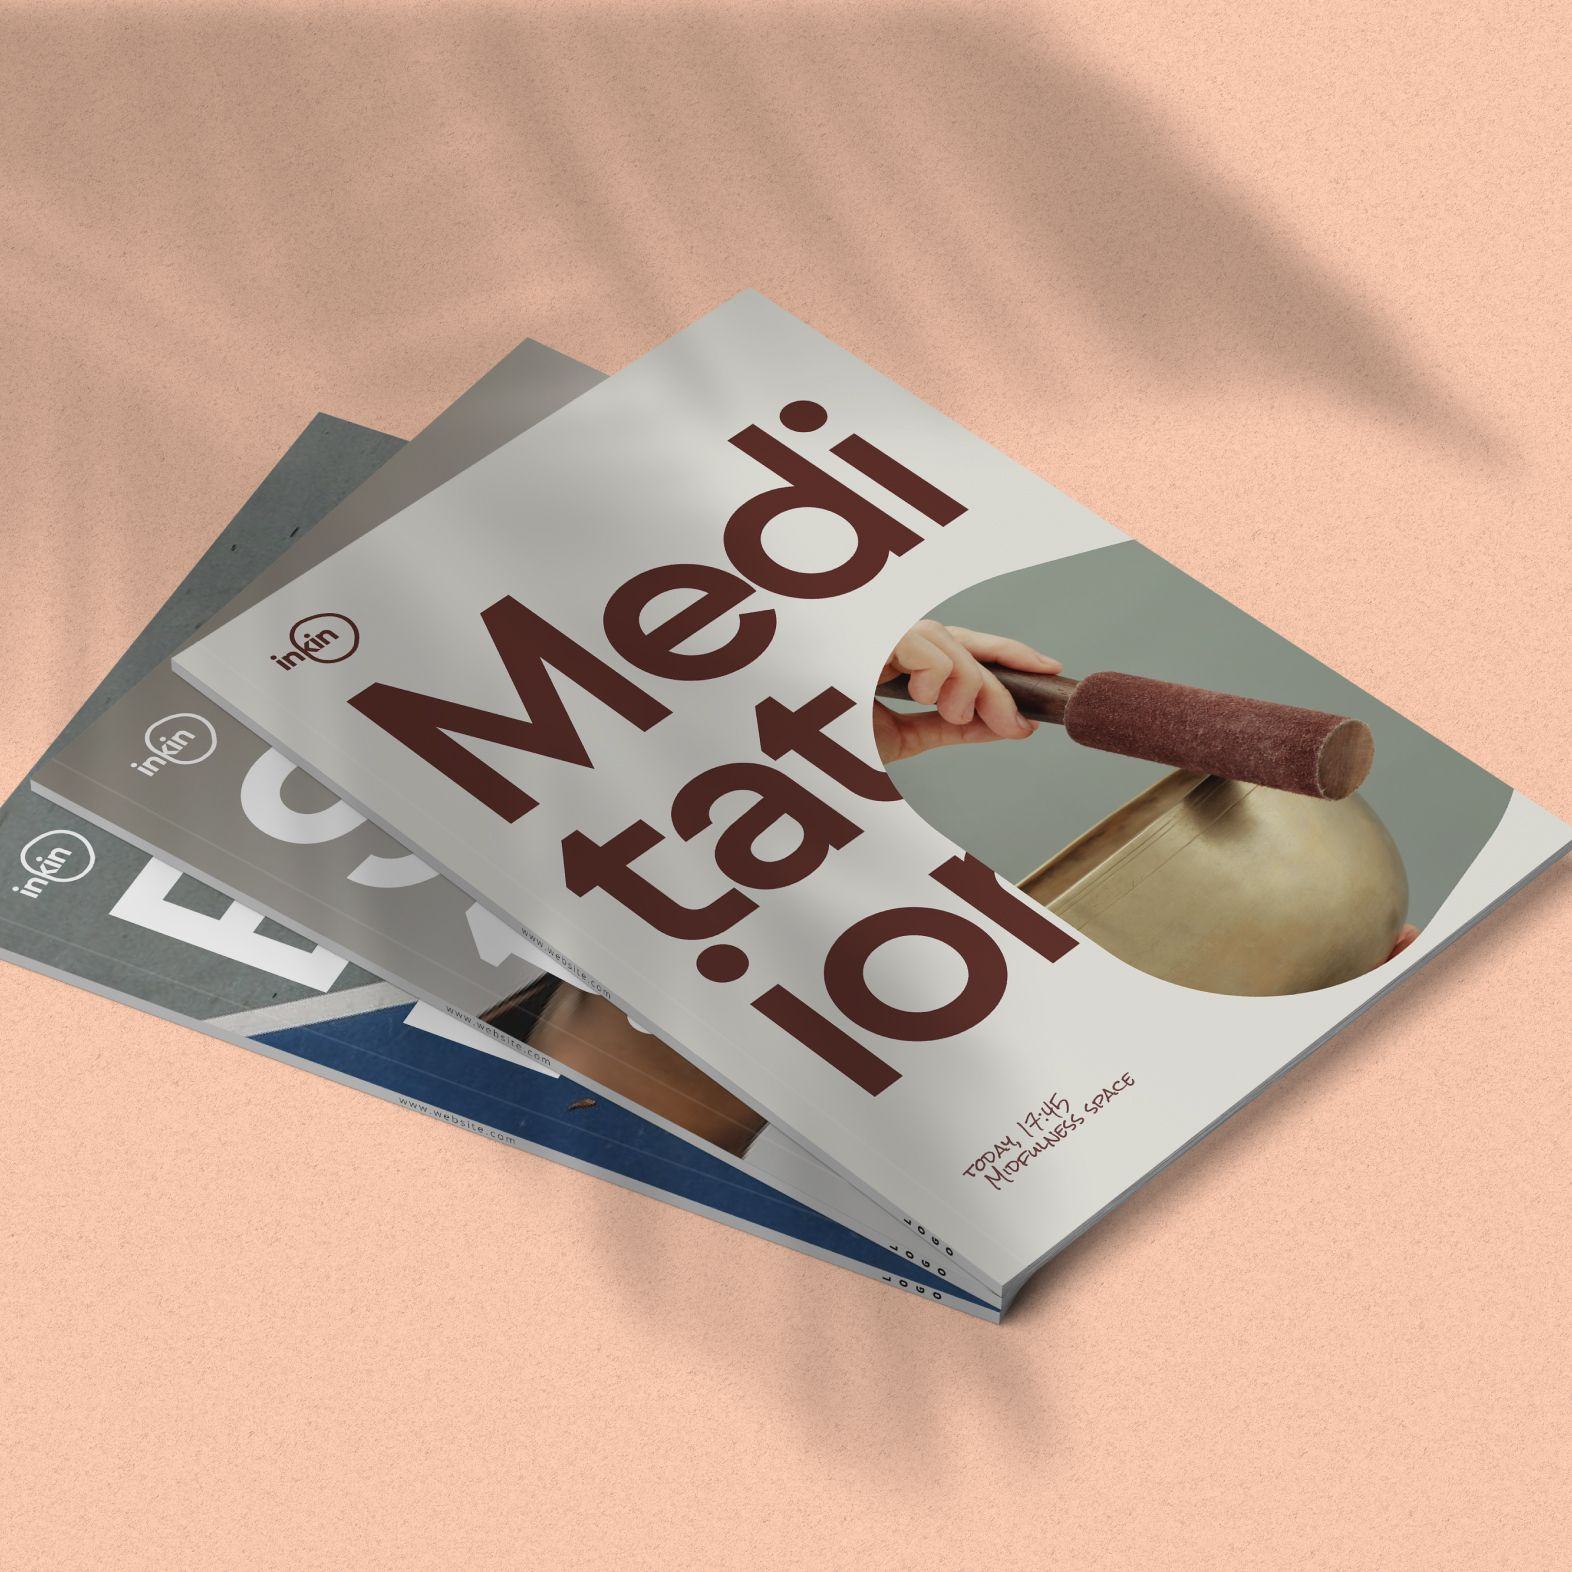 inkin magazine cover meditation